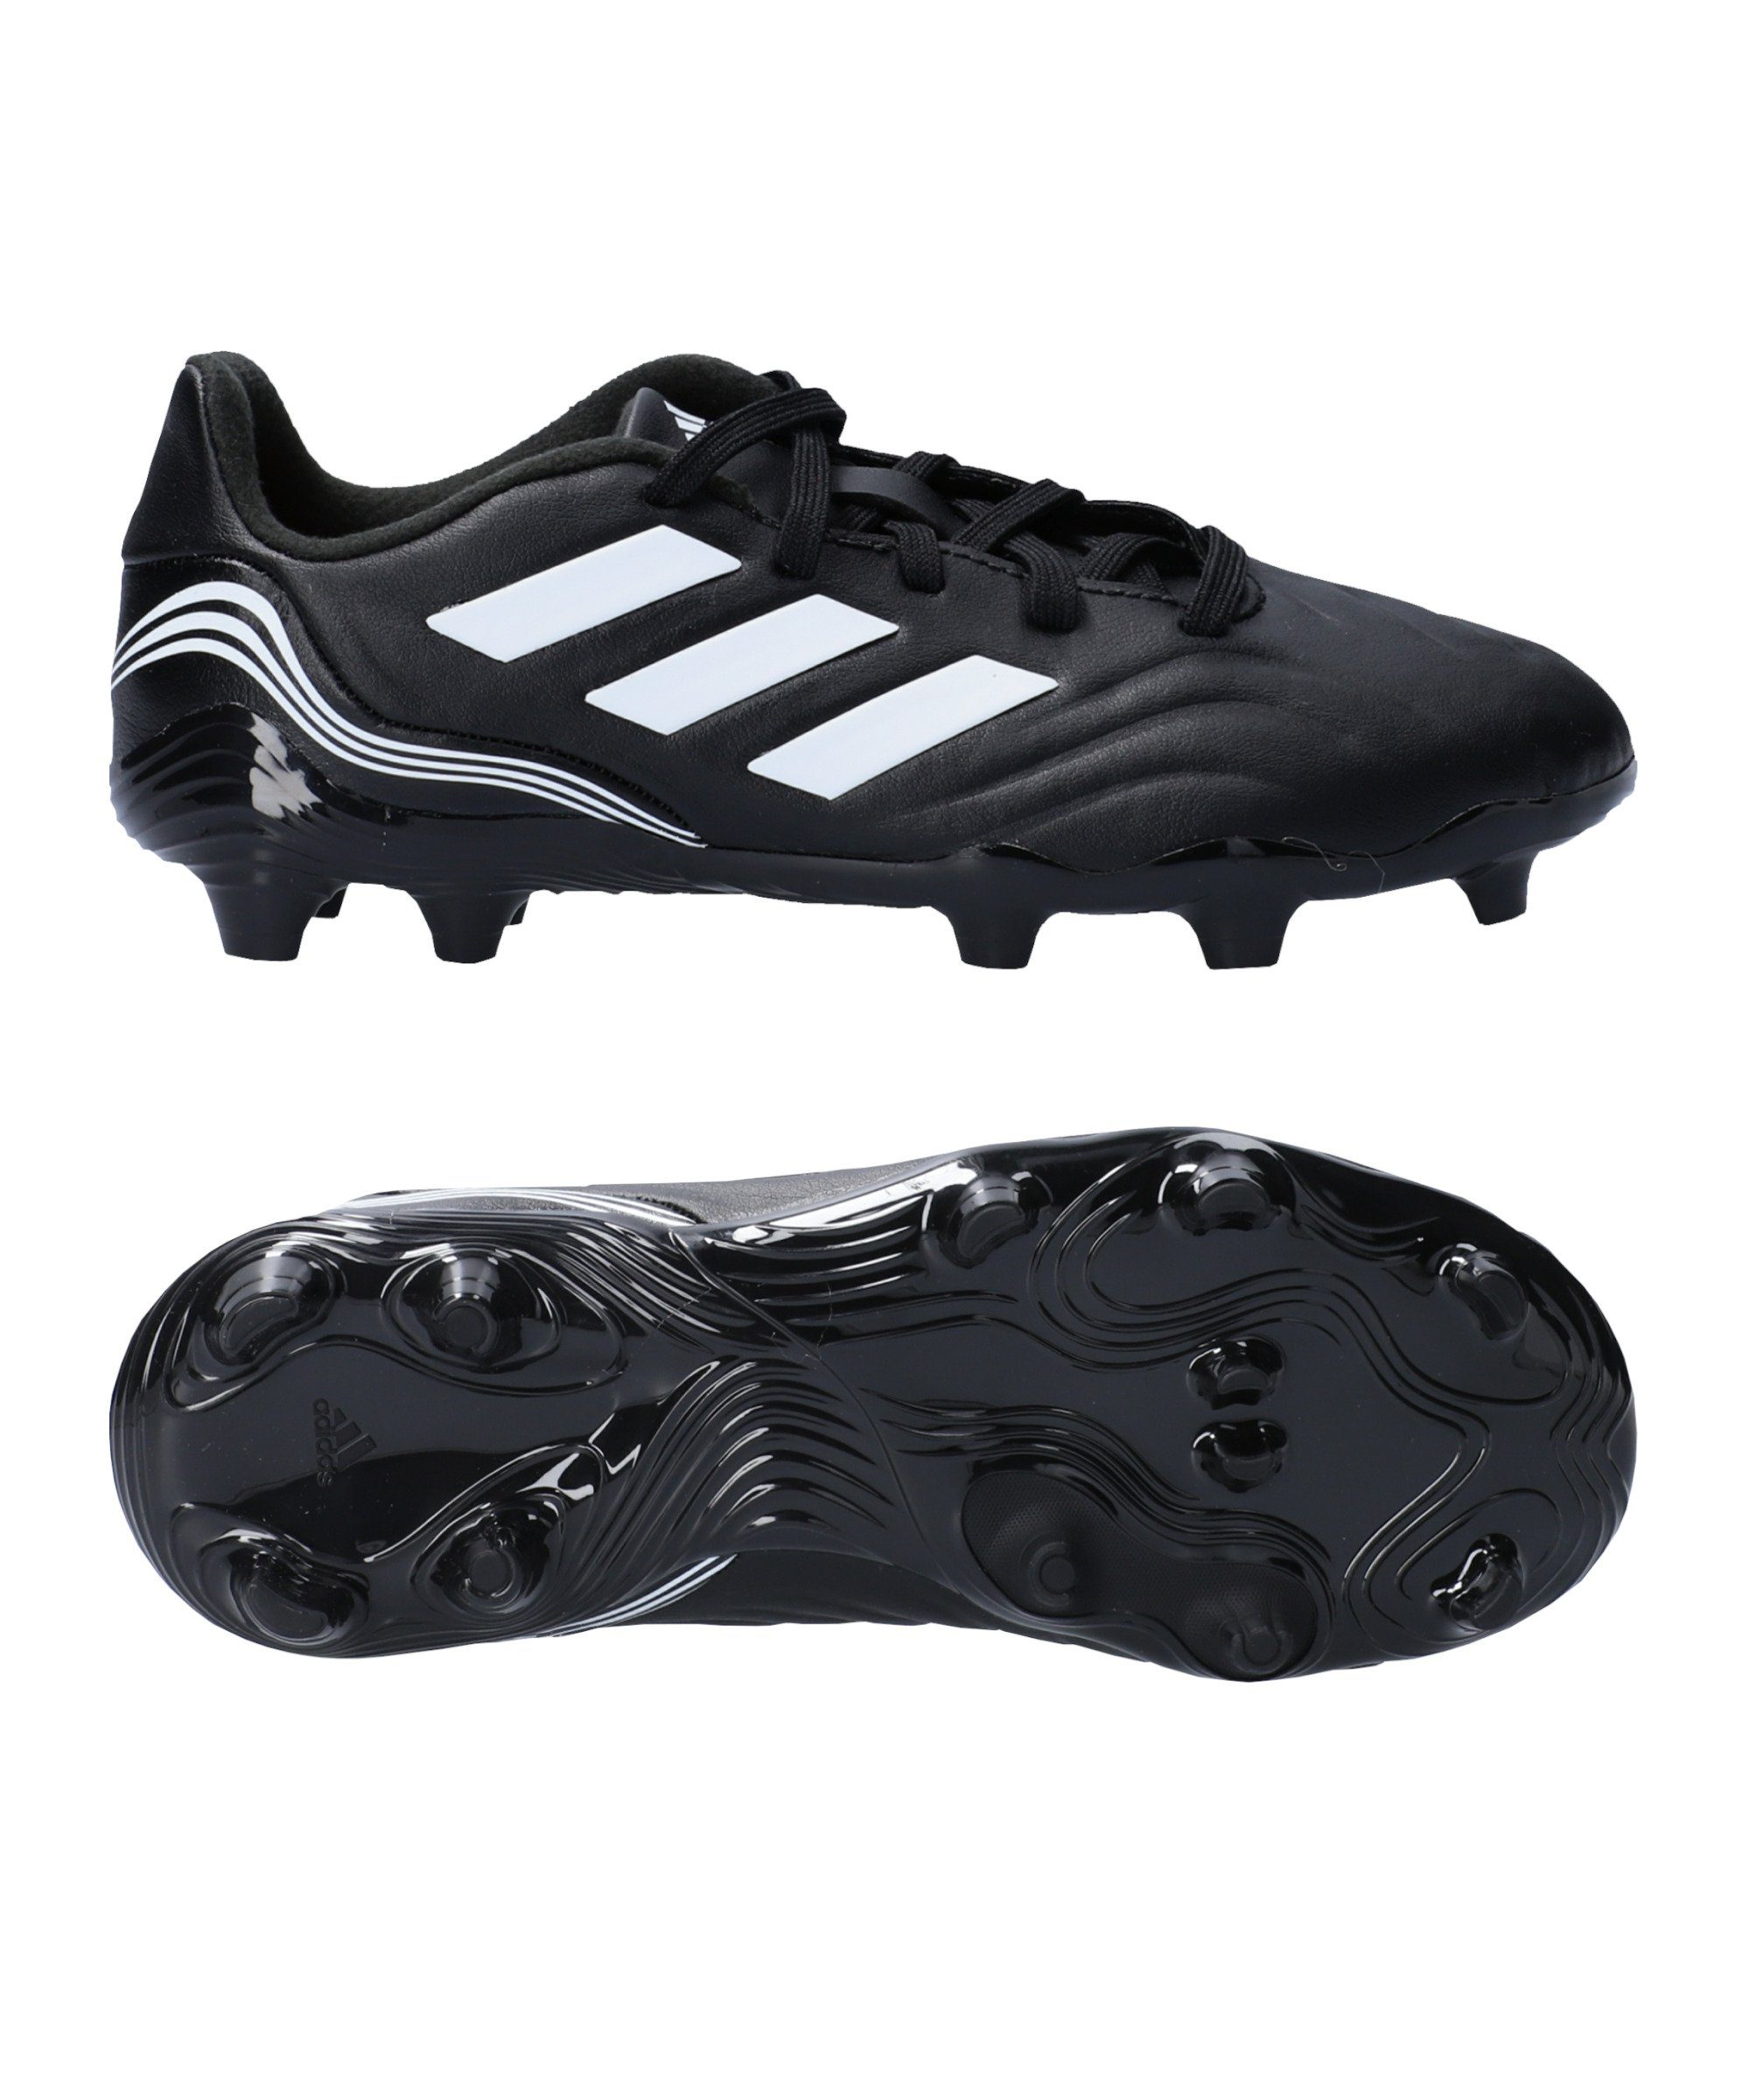 SENSE.3 Sportswear adidas COPA Data FG Kids Fußballschuh schwarzweissrot Performance Game adidas